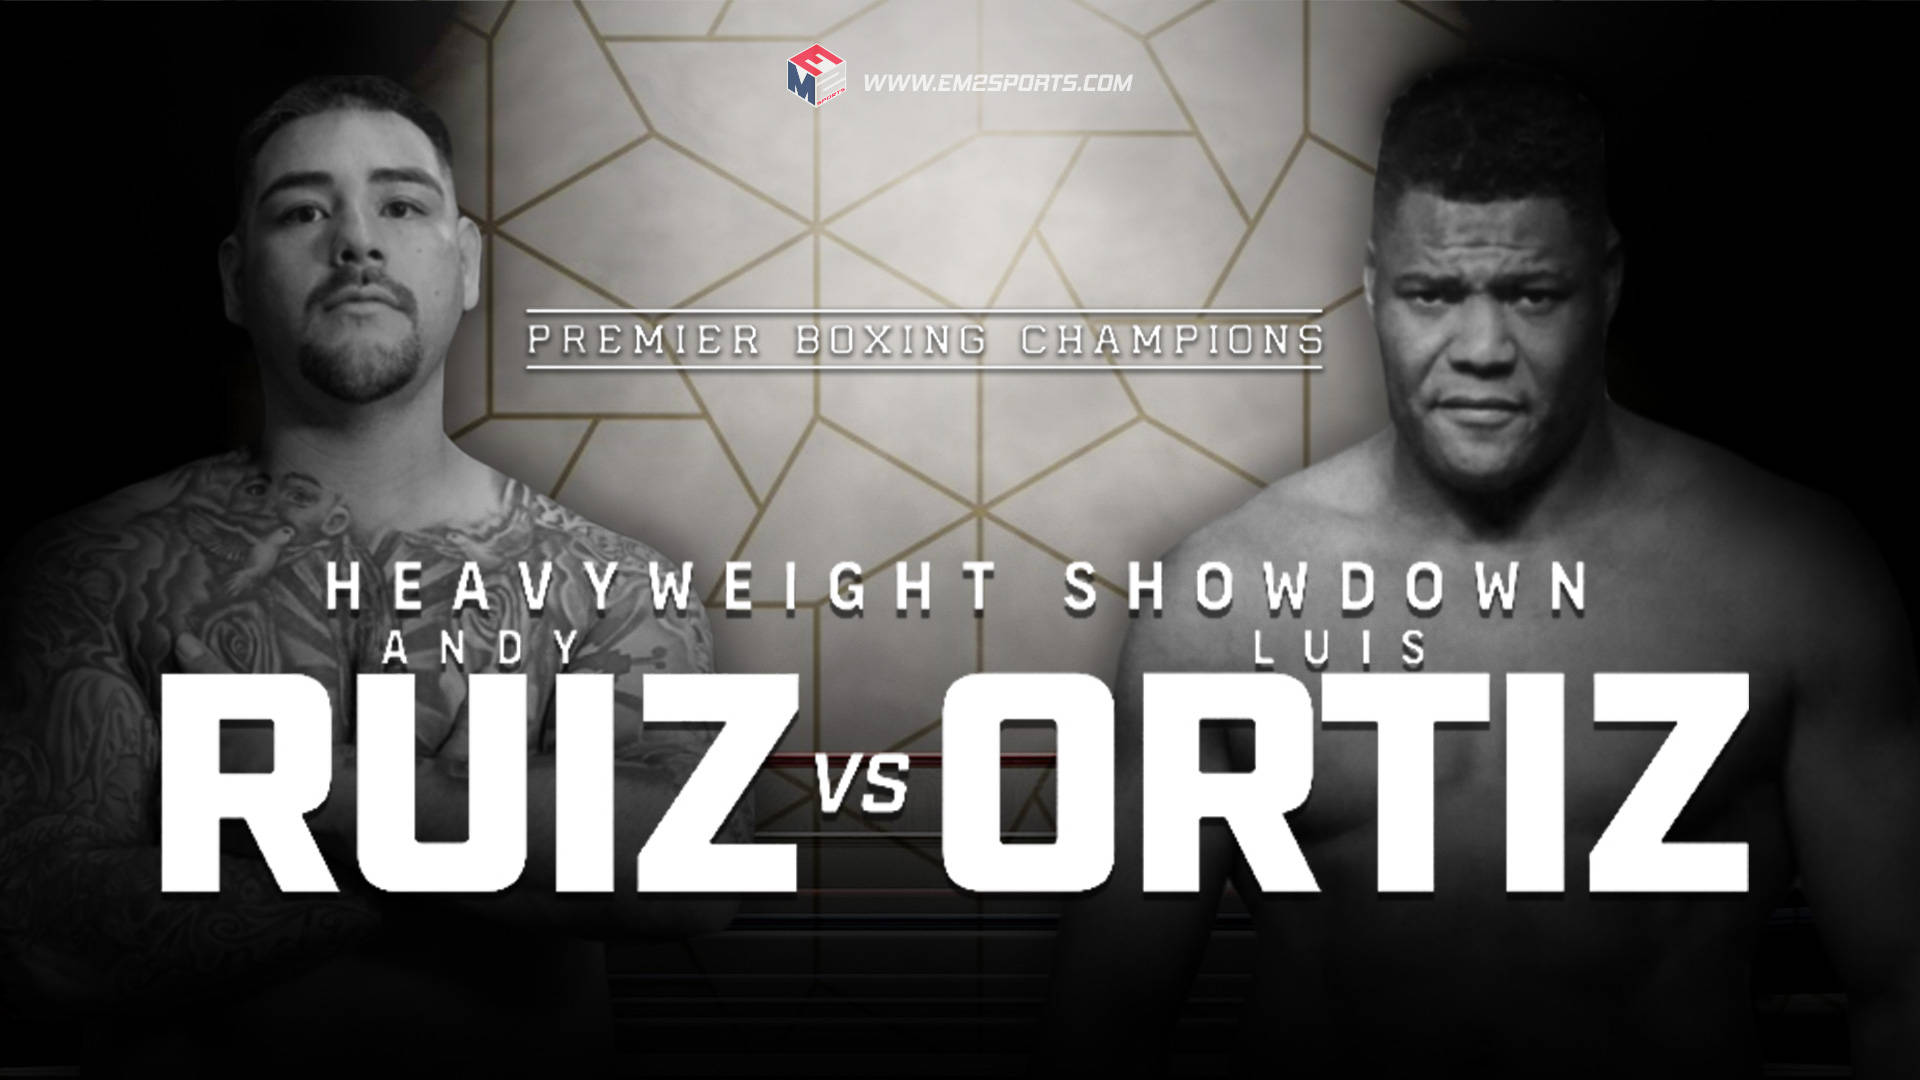 Andy Ruiz Vs Ortiz Heavyweight Showdown